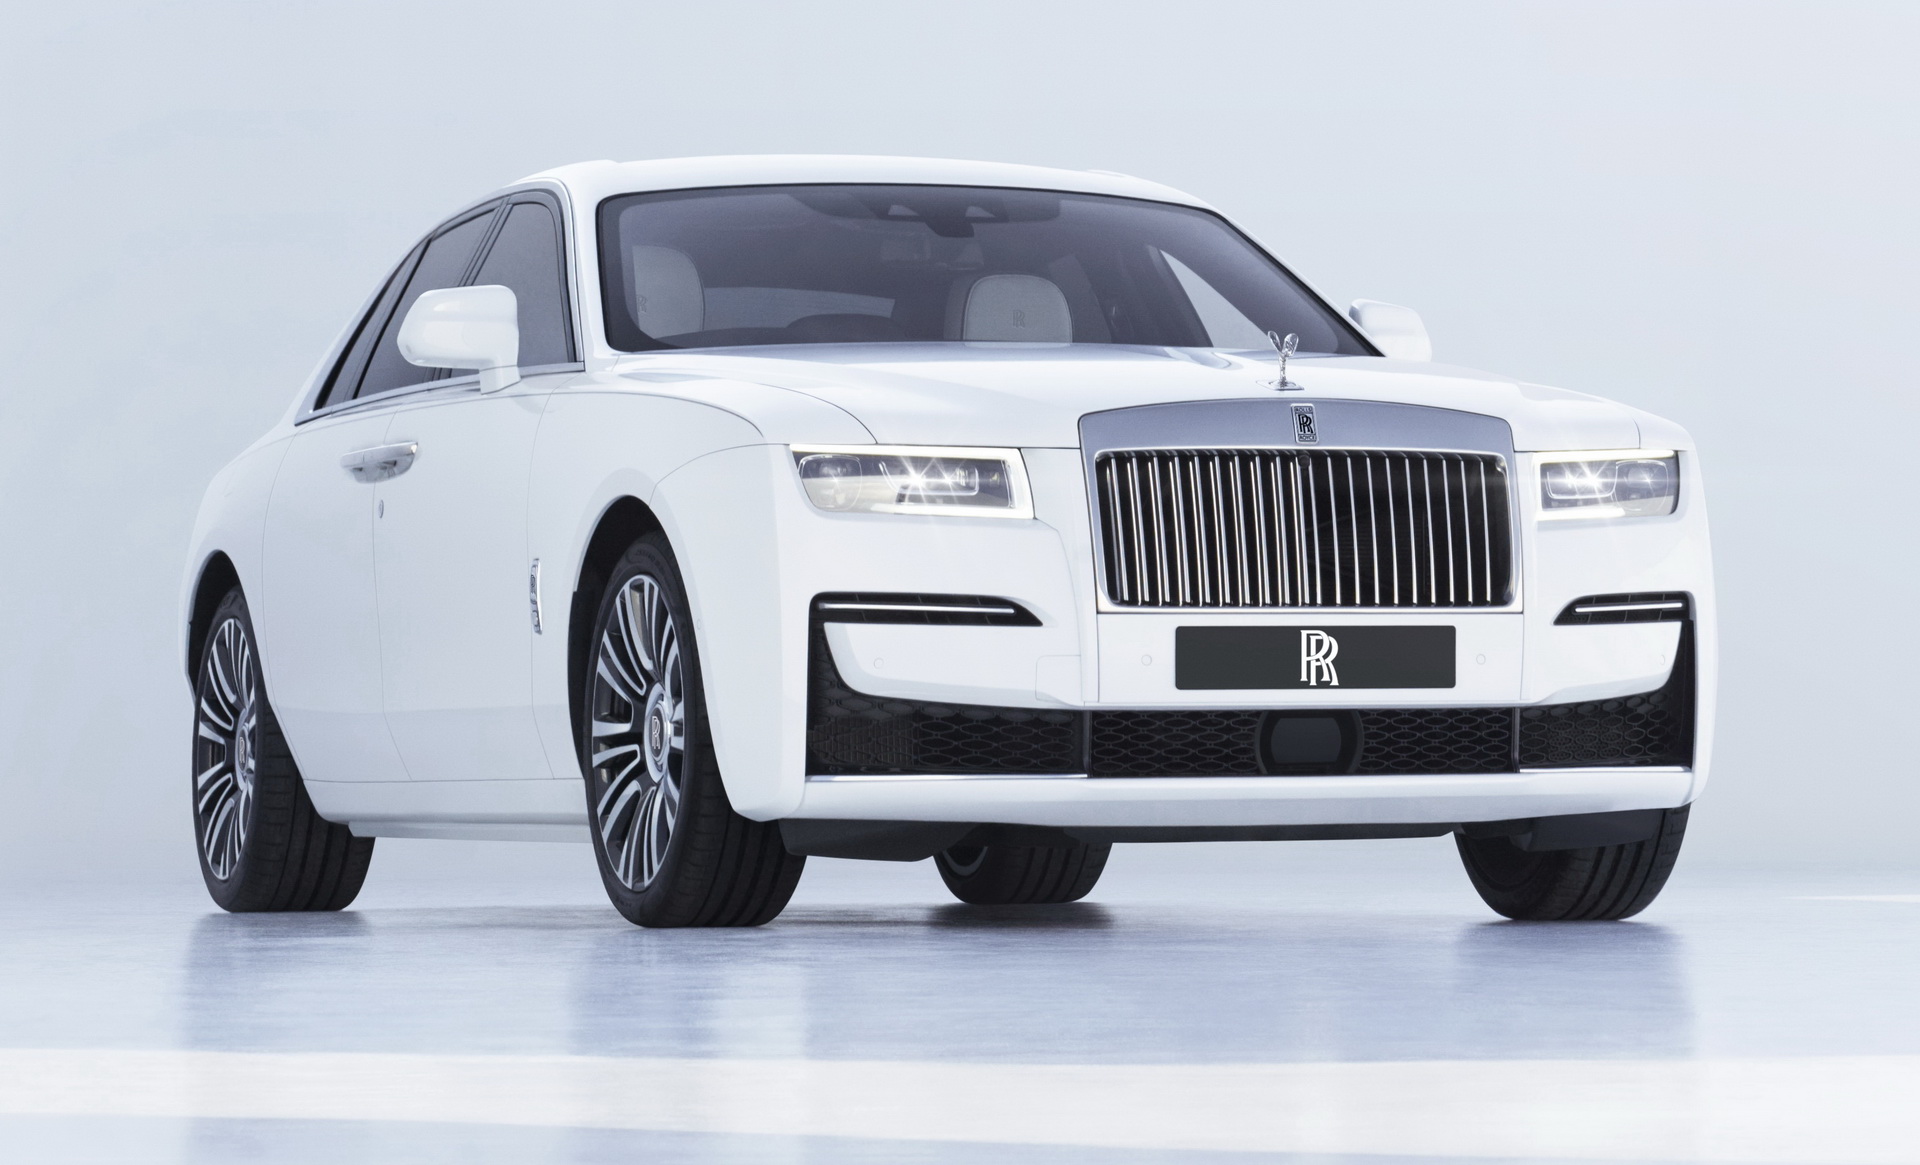 новый Rolls-Royce Ghost 2021 фото